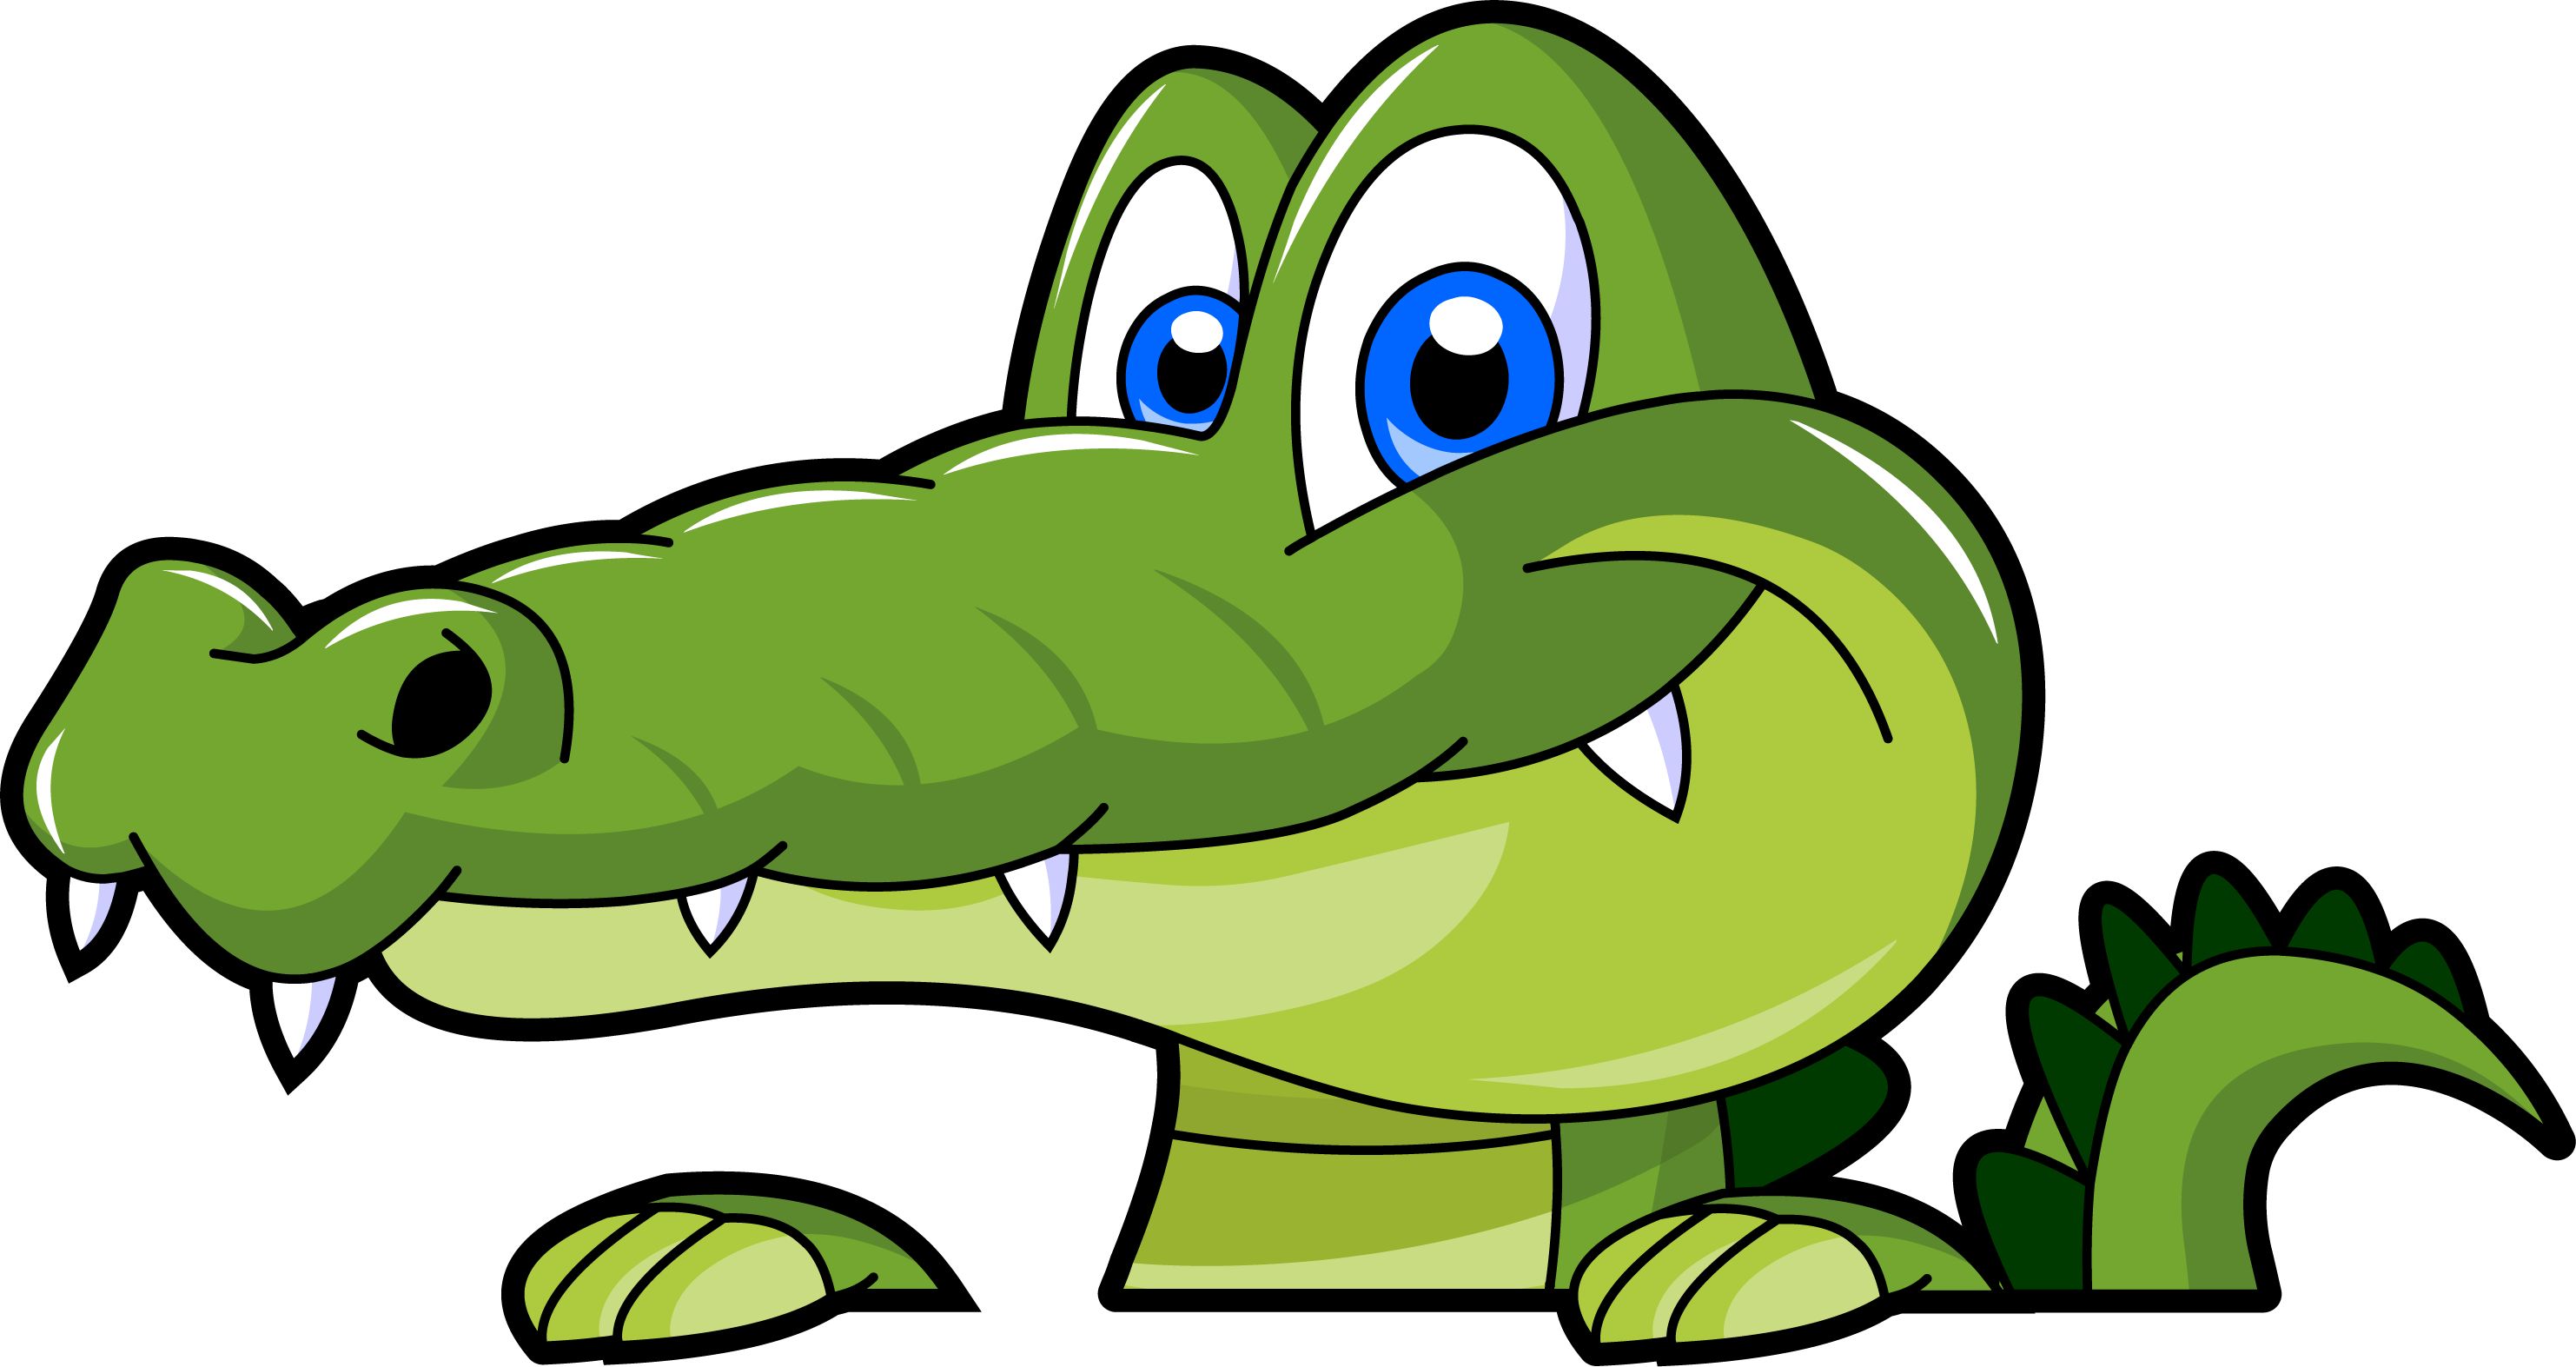 Cute Alligator Cartoon - ClipArt Best